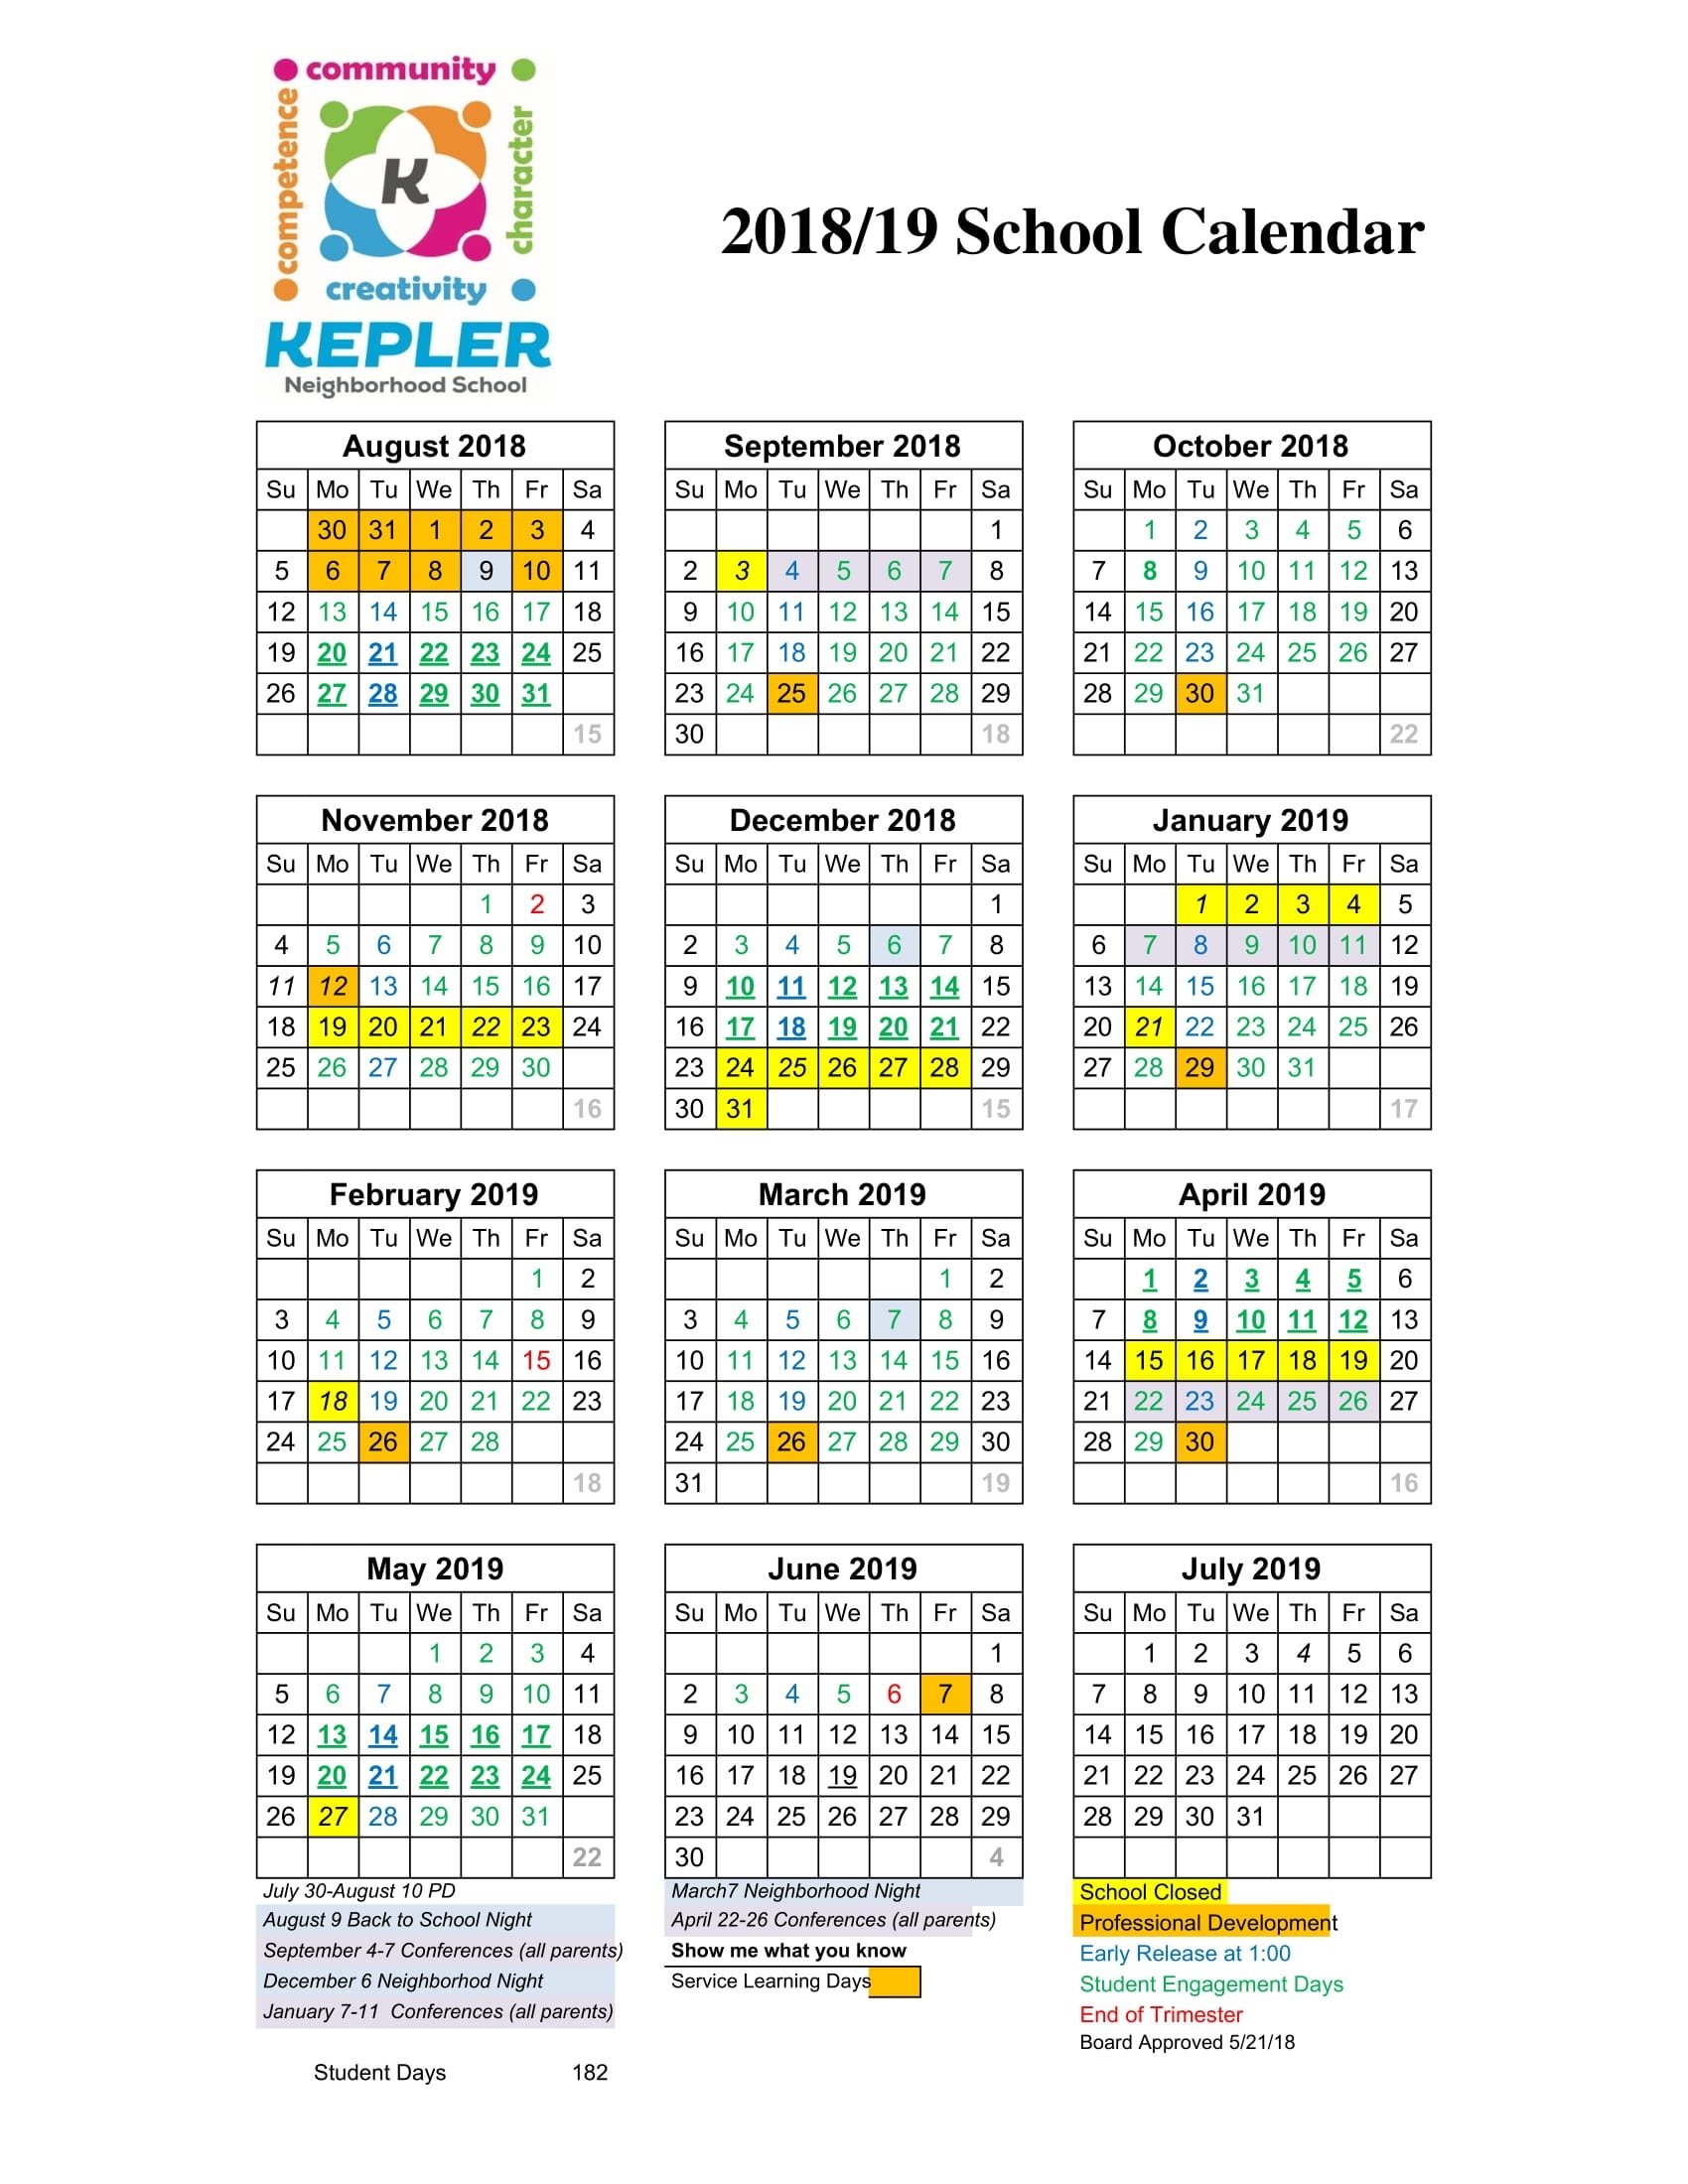 2018 - 2019 Kepler School Calendar - Kepler Neighborhood School Is 7 School Calendar